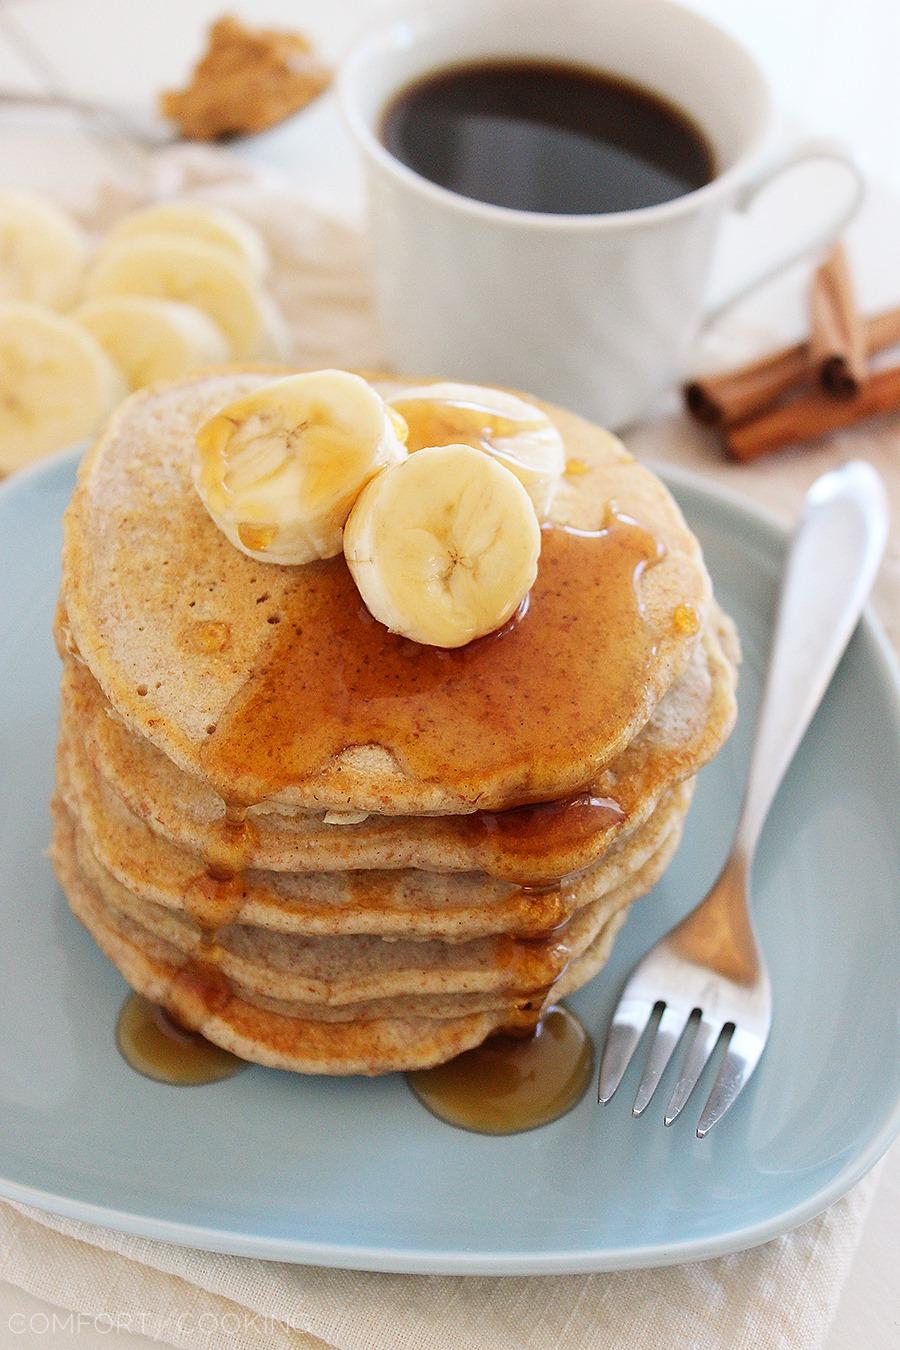 Whole Wheat Peanut Butter-Banana Pancakes